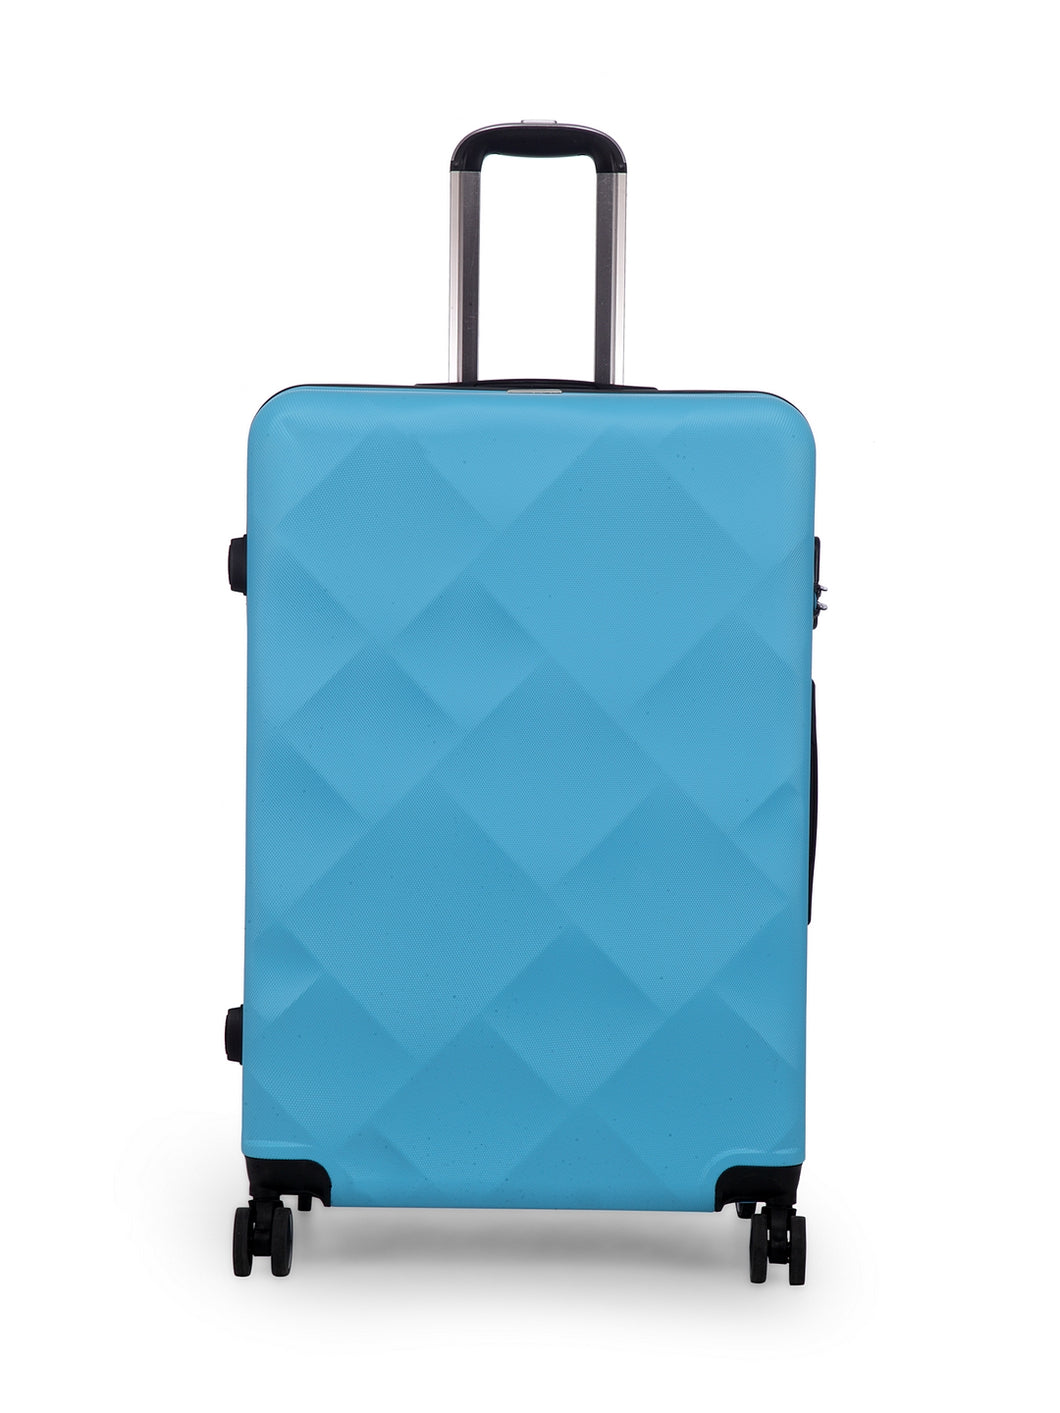 Unisex Blue Textured Hard-Sided Large Trolley Suitcase